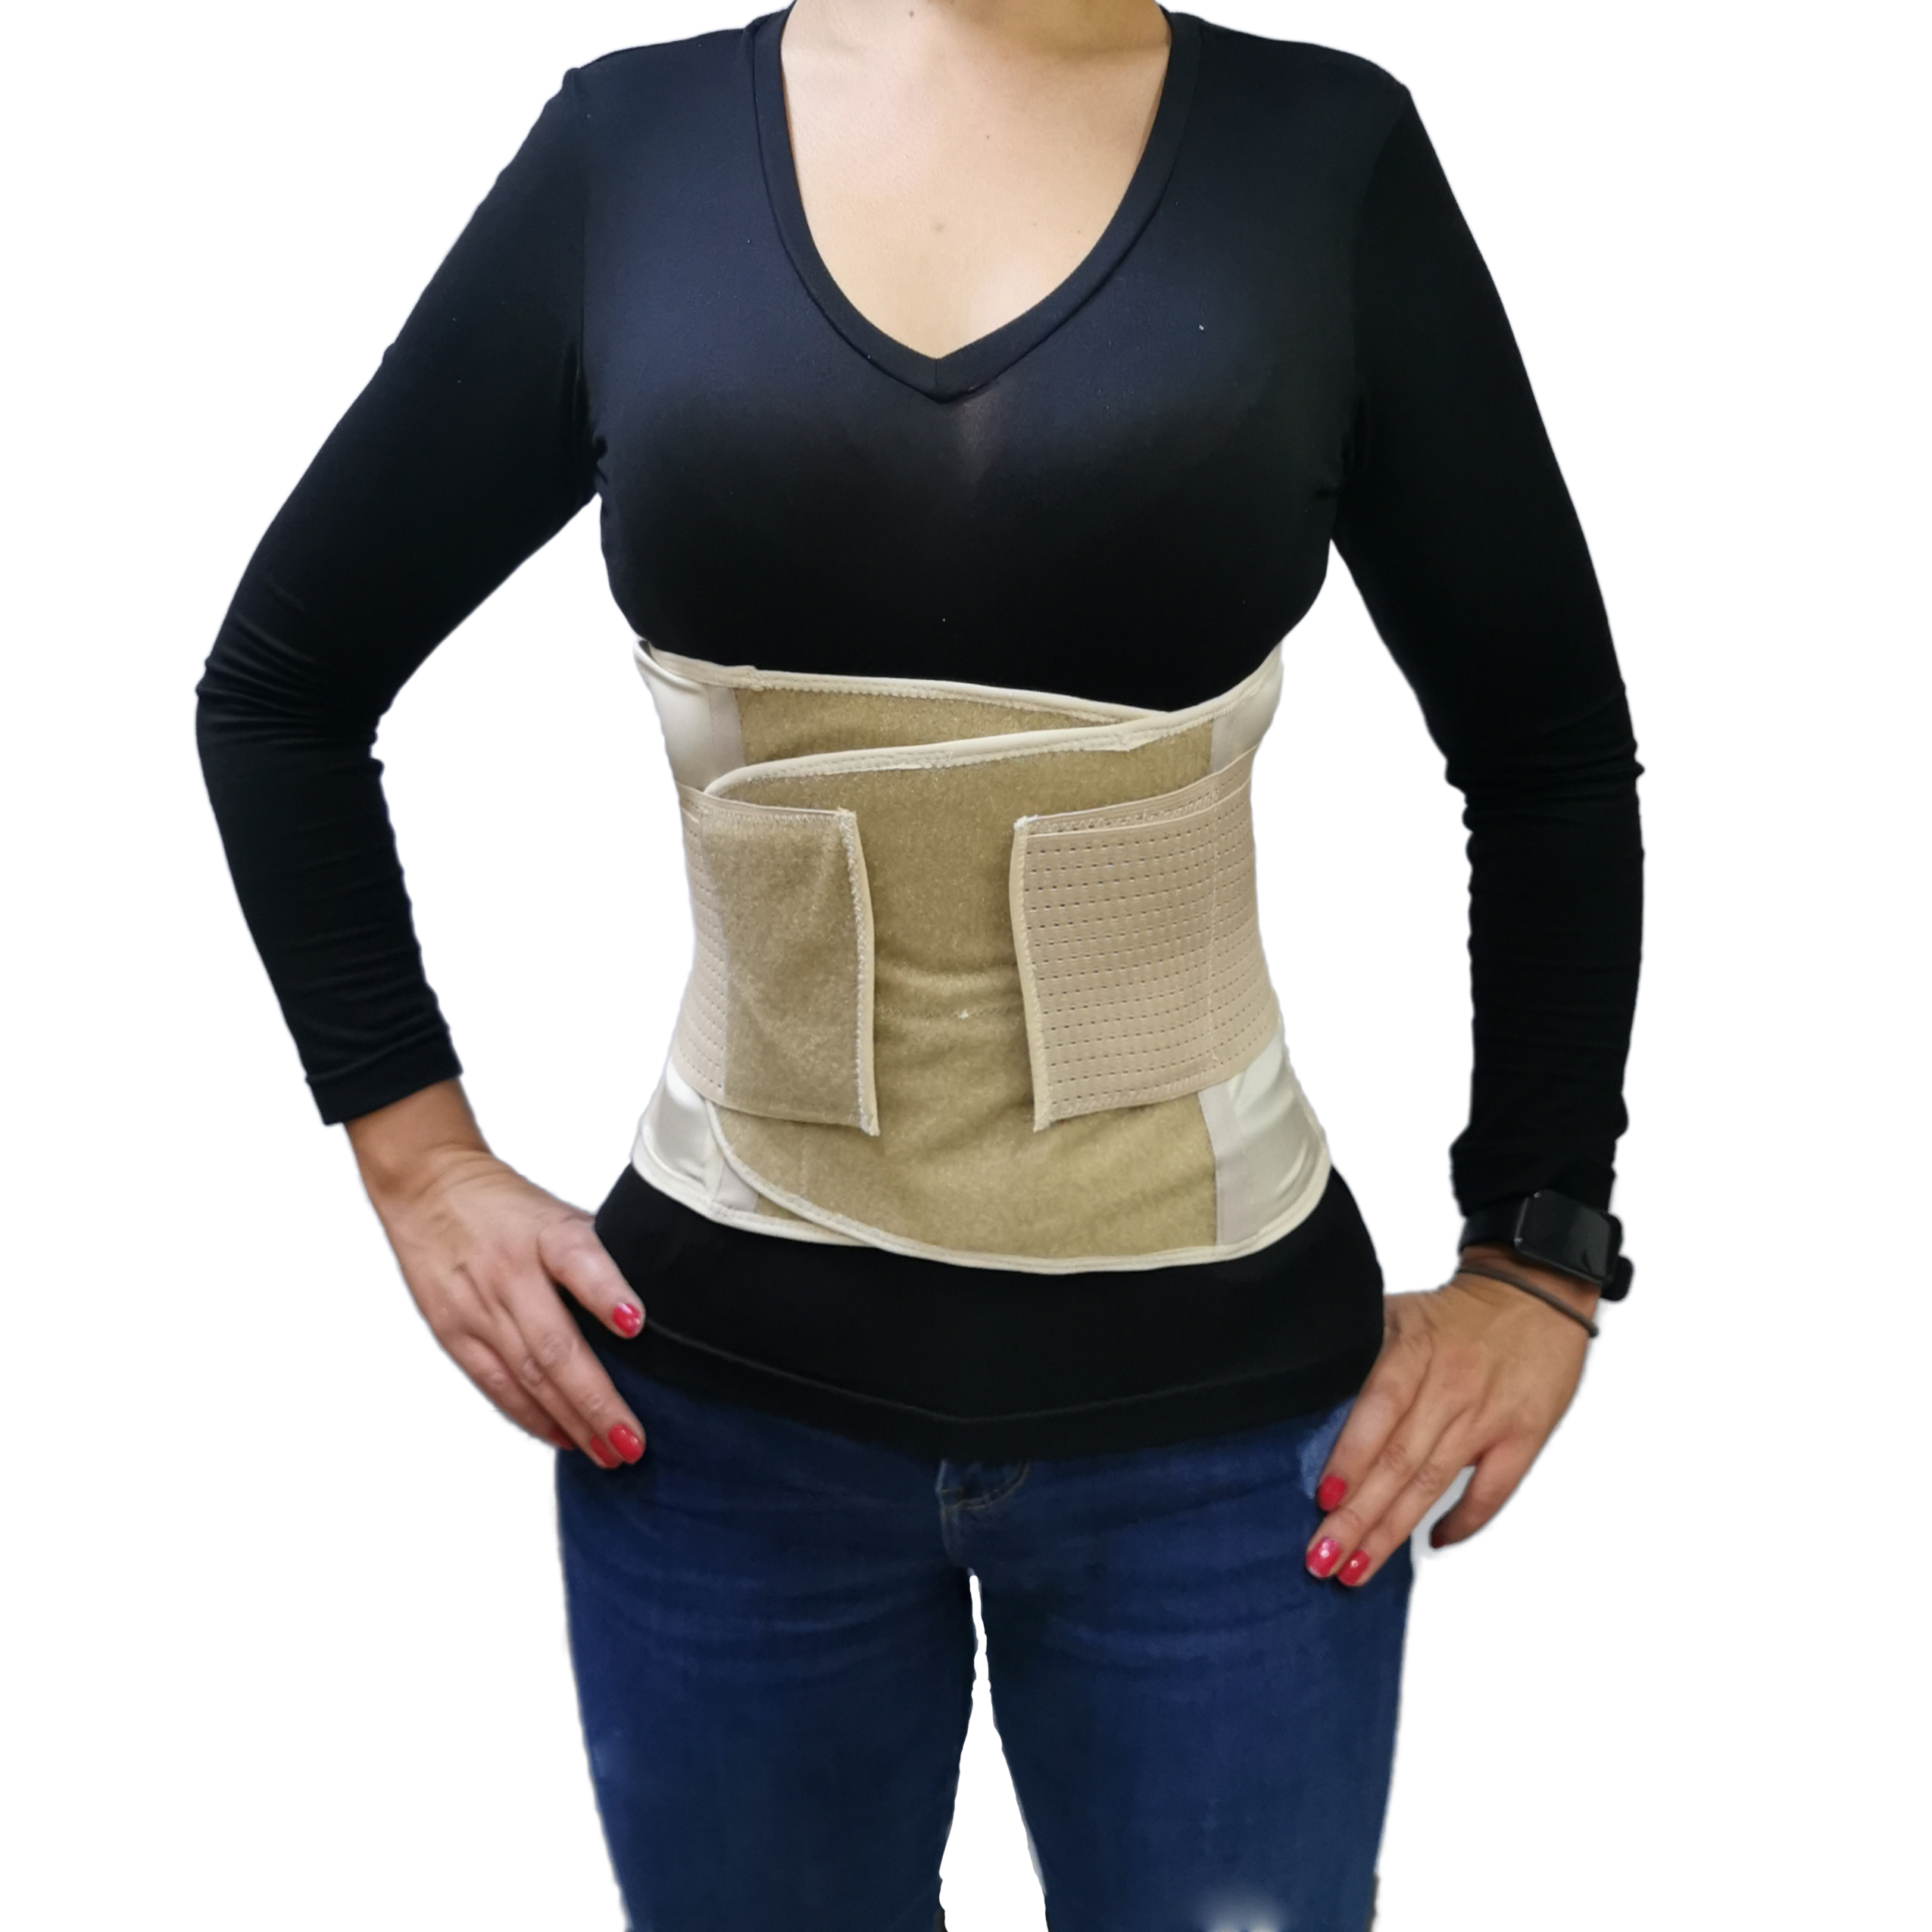 https://corseterialaconchita.mx/wp-content/uploads/2022/03/Cinturilla-3-Ajustes.jpg